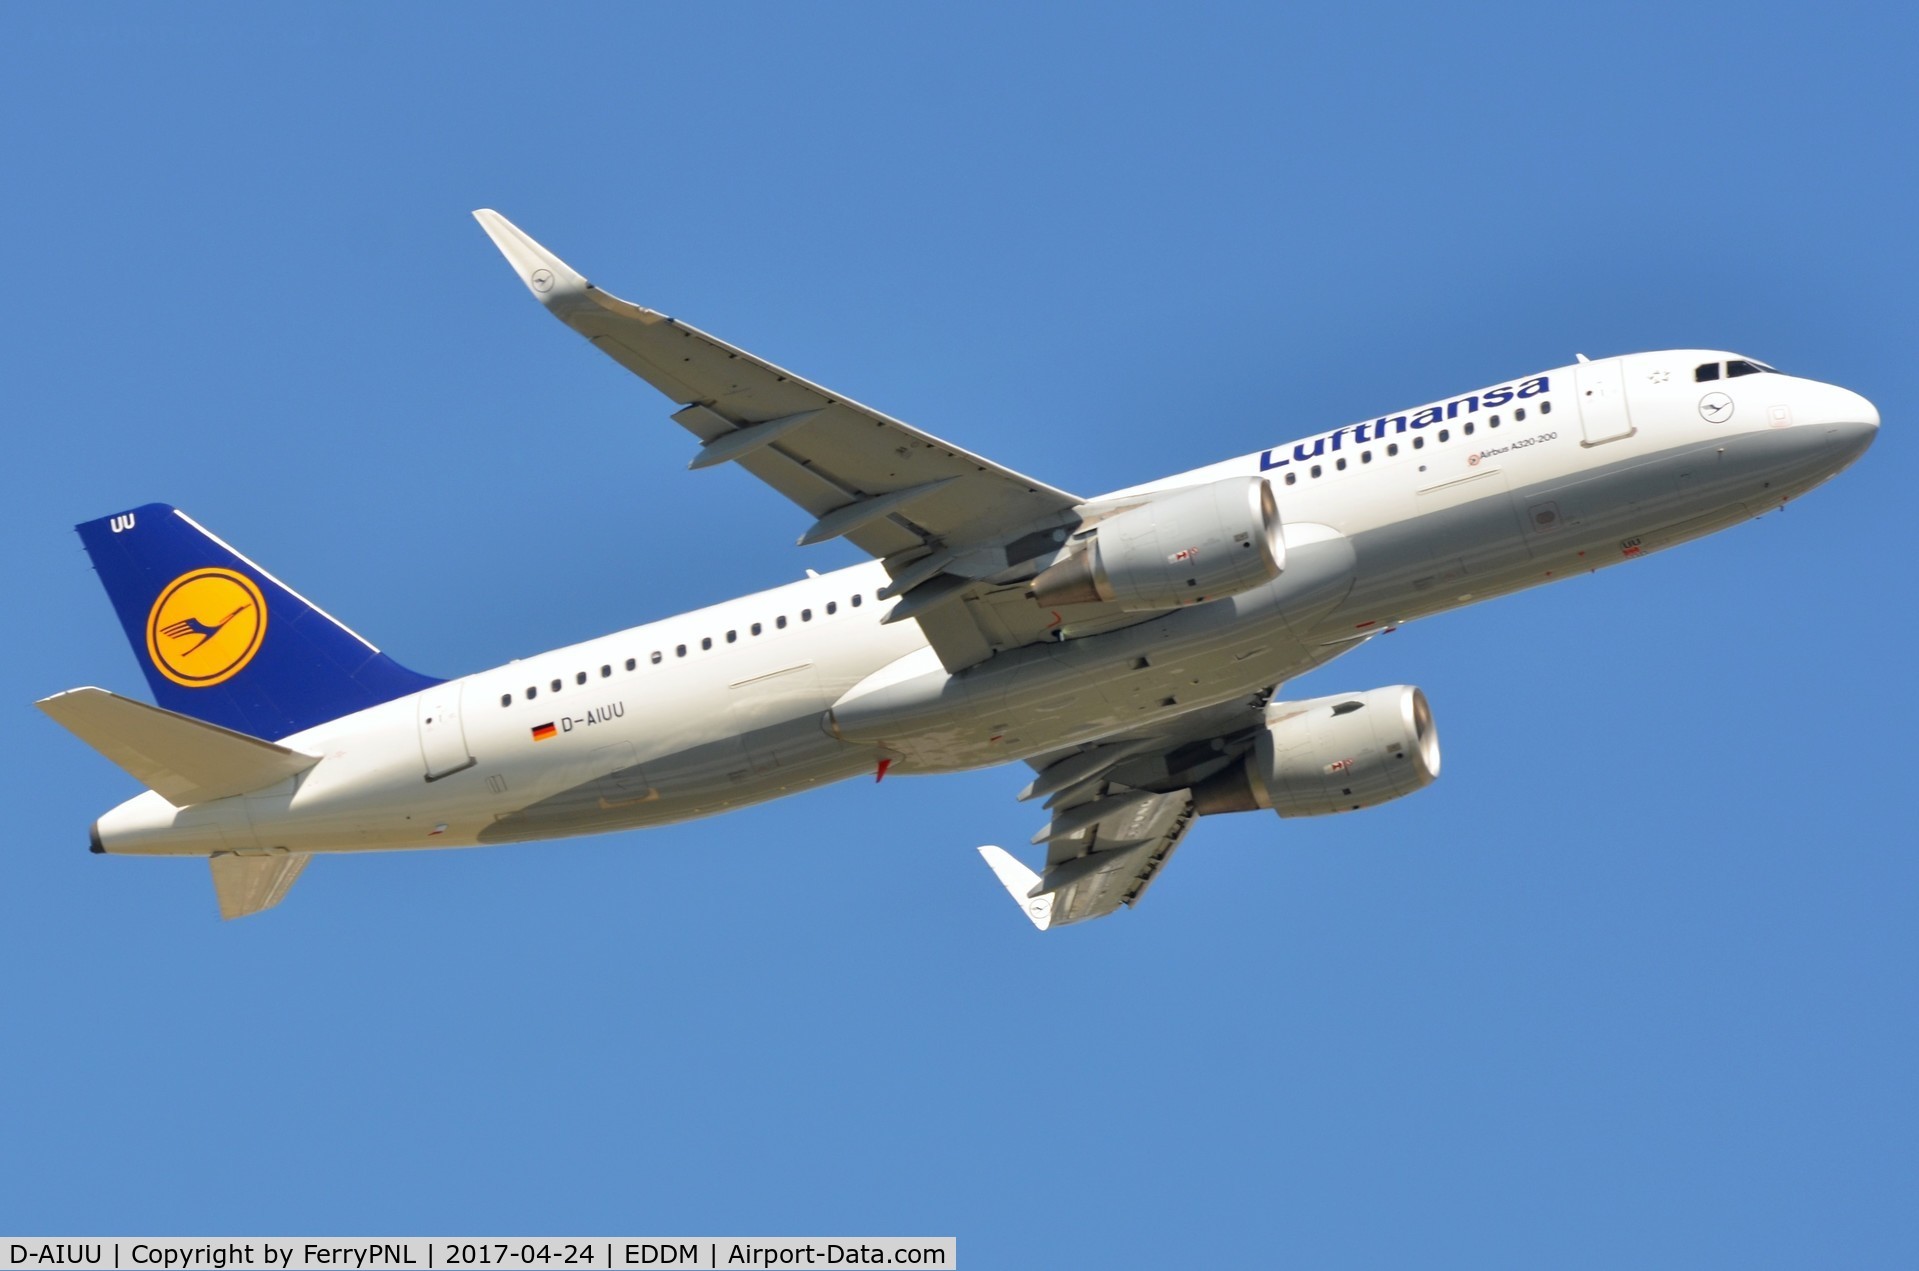 D-AIUU, 2016 Airbus A320-214 C/N 7158, Departure of Lufthansa A320